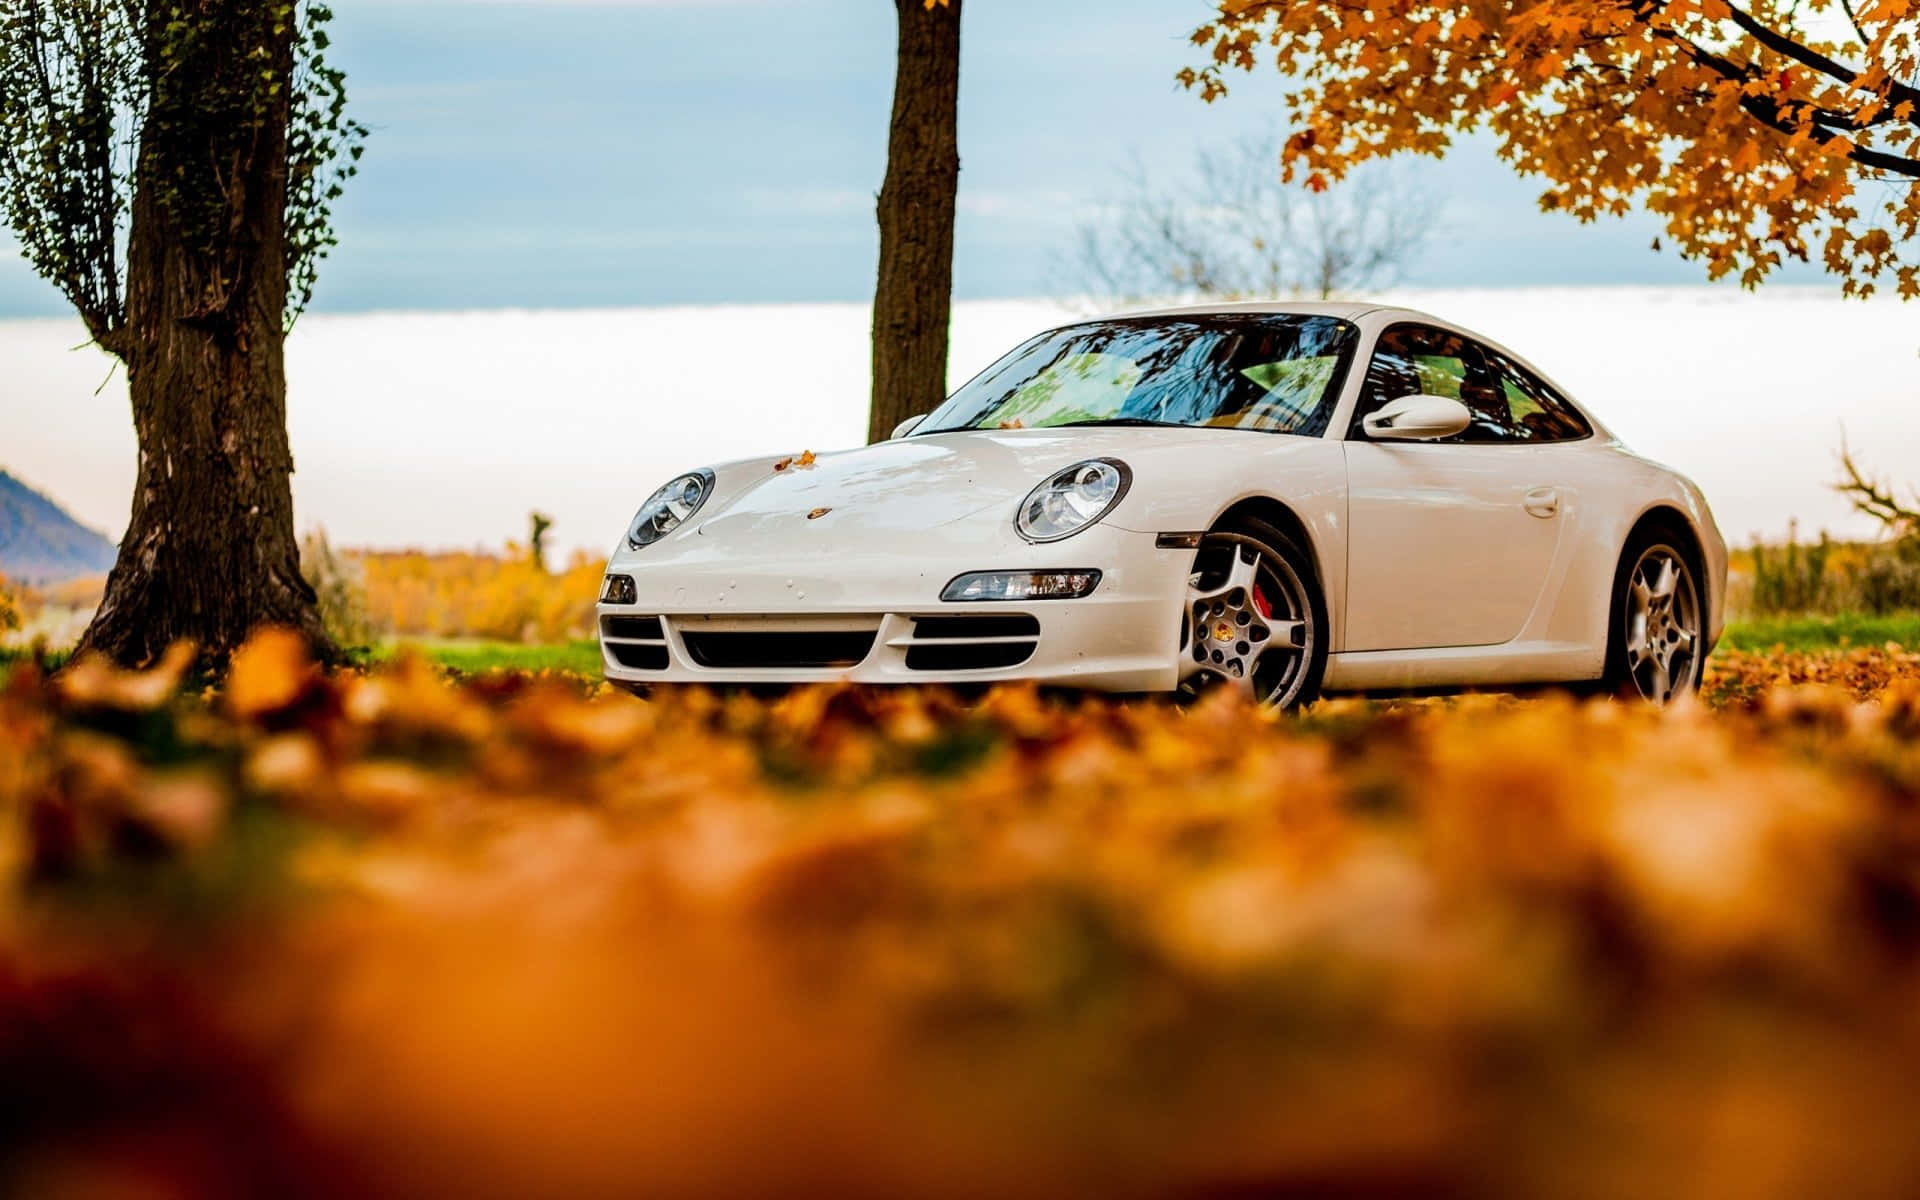 Elegant Porsche 911 on a scenic mountain road